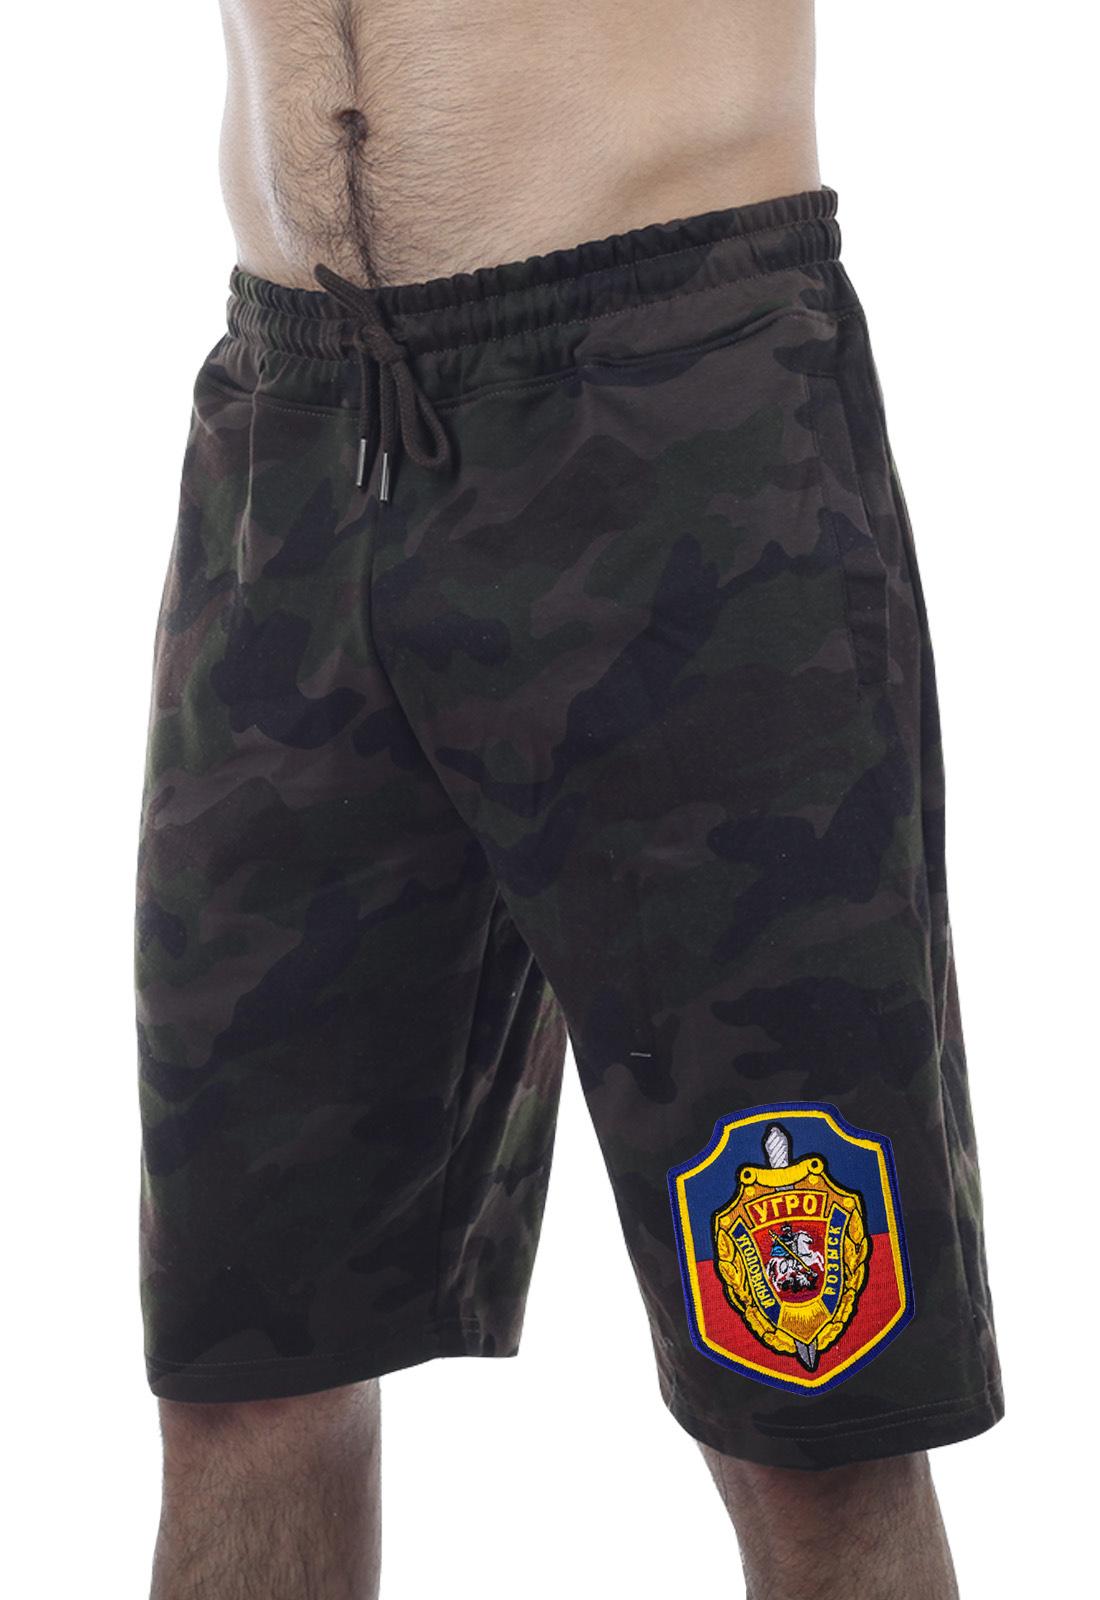 Мужские шорты милитари УГРО